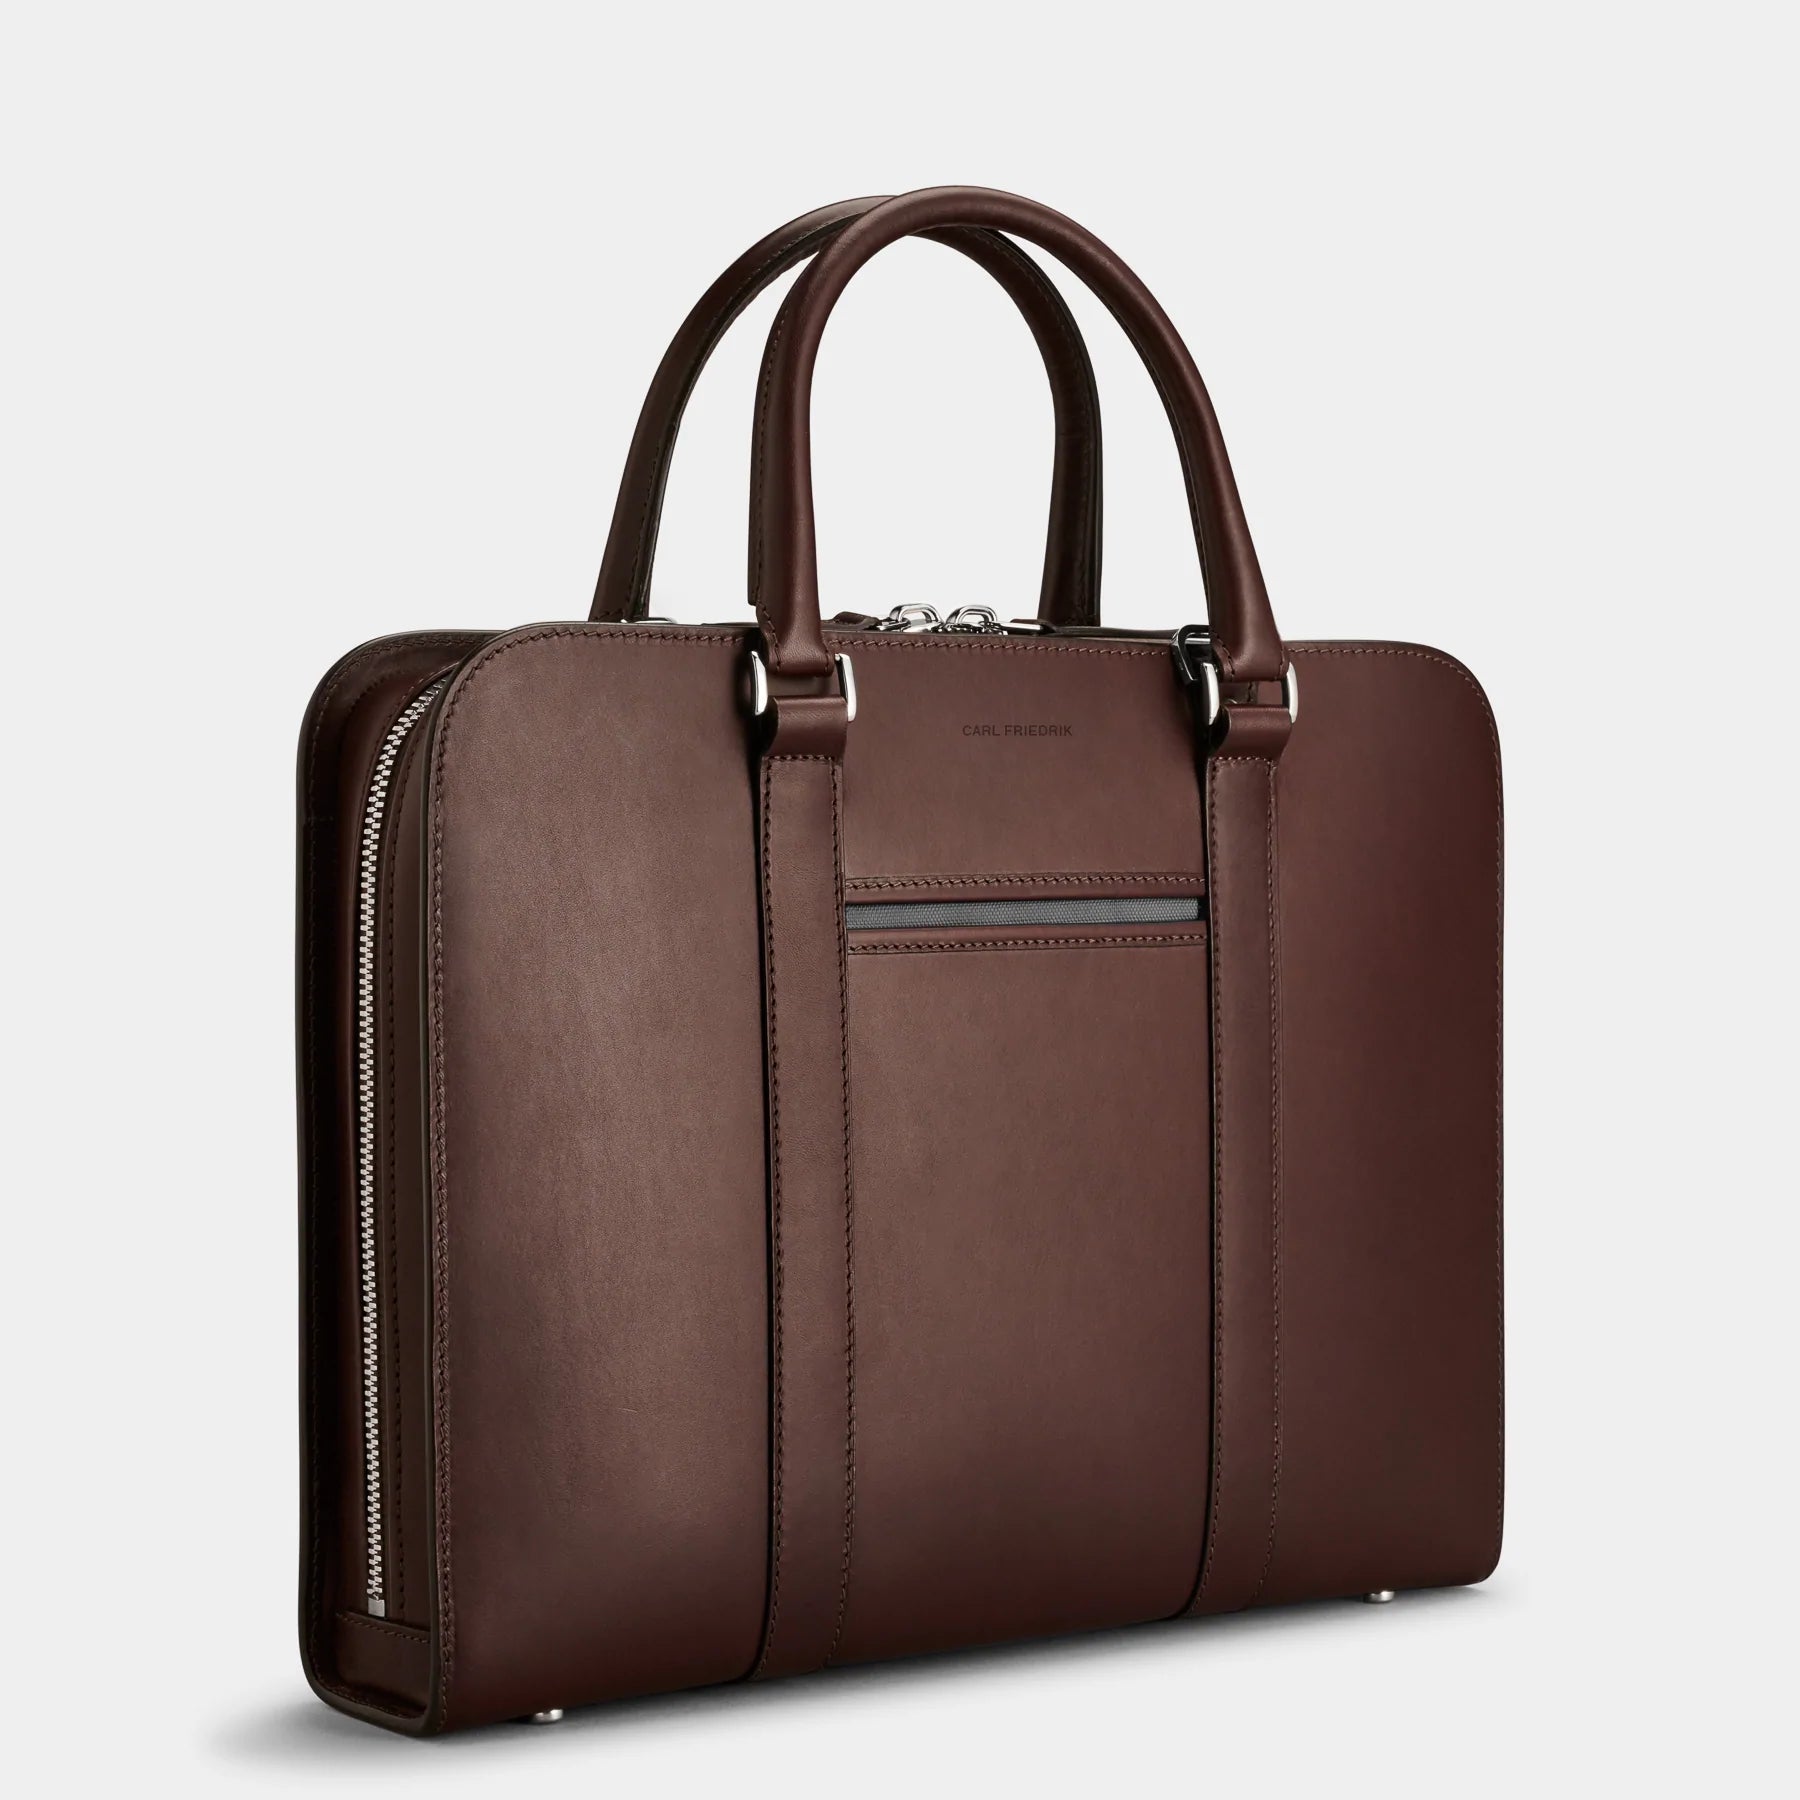 Palissy Briefcase - Return Chocolate Slim leather briefcase - Excellent condition